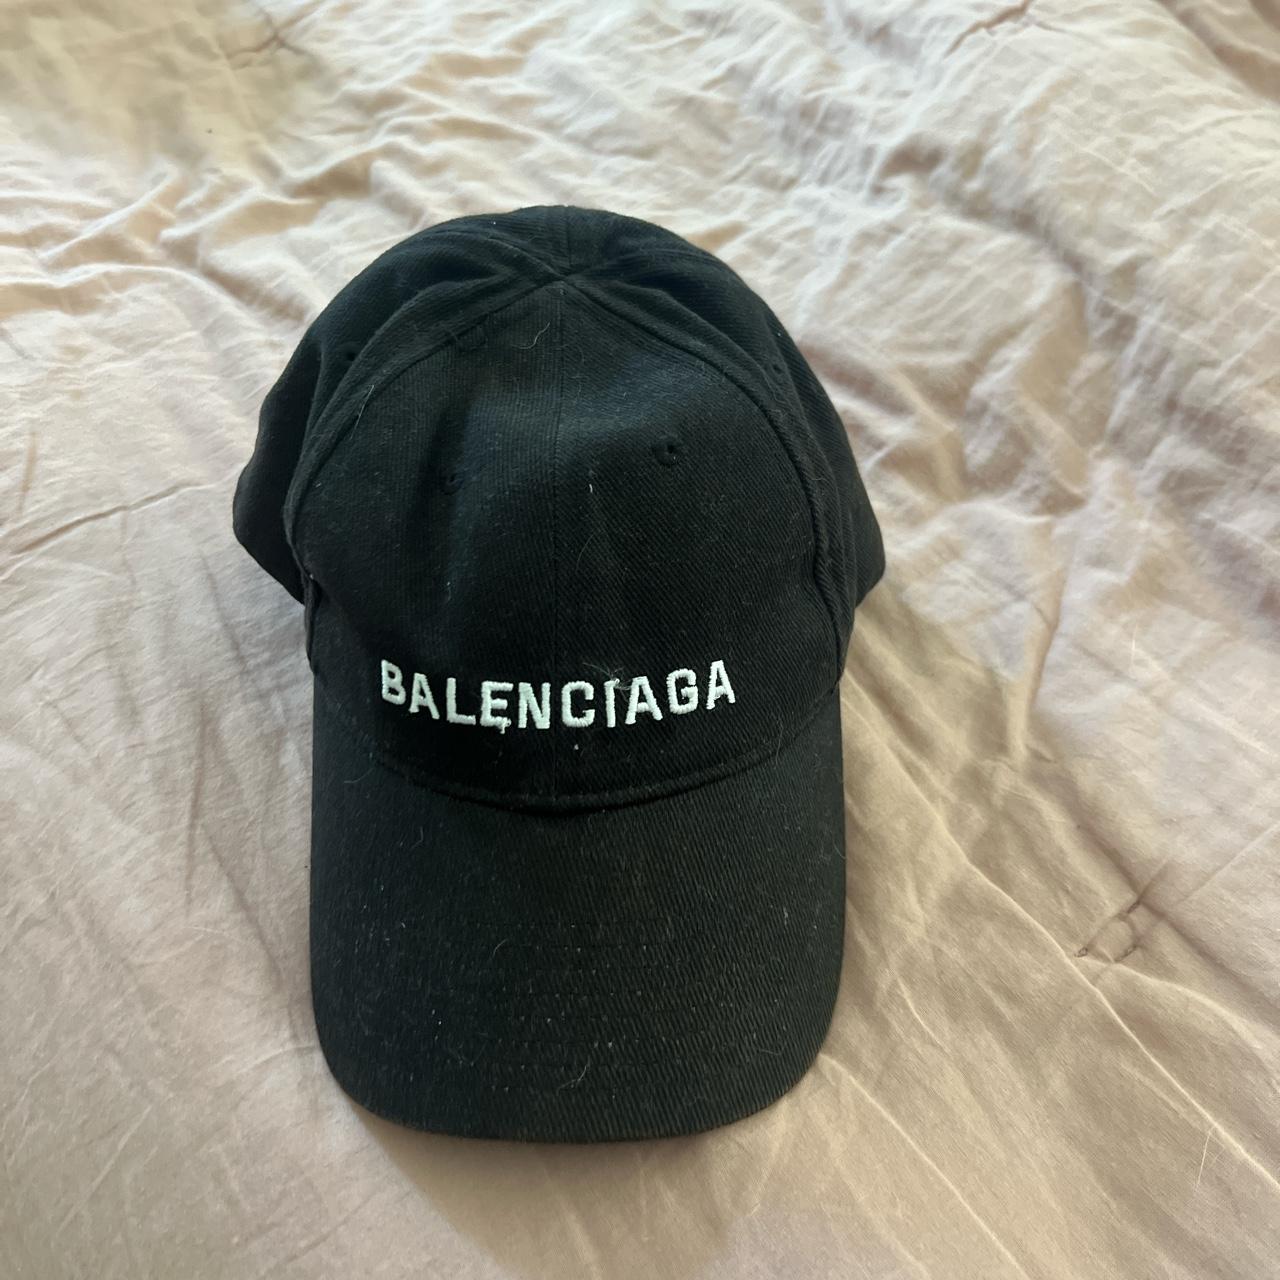 Balenciaga Women's Black Hat